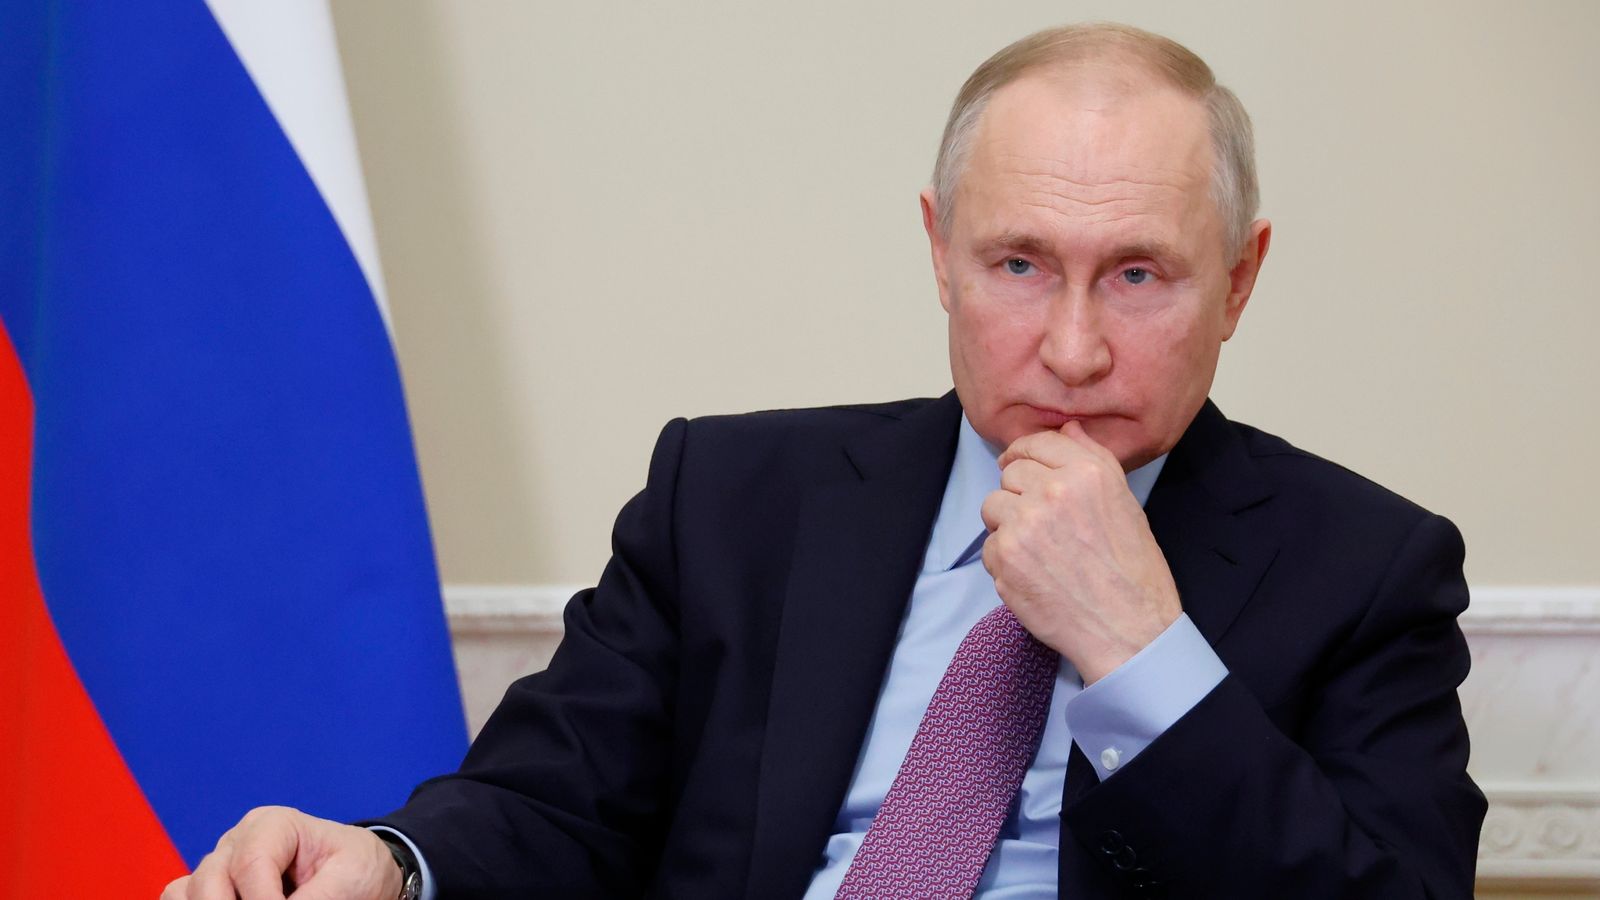 Putin is attempting to destabilise European countries to divert attention from Ukraine, warns Kosovo's president